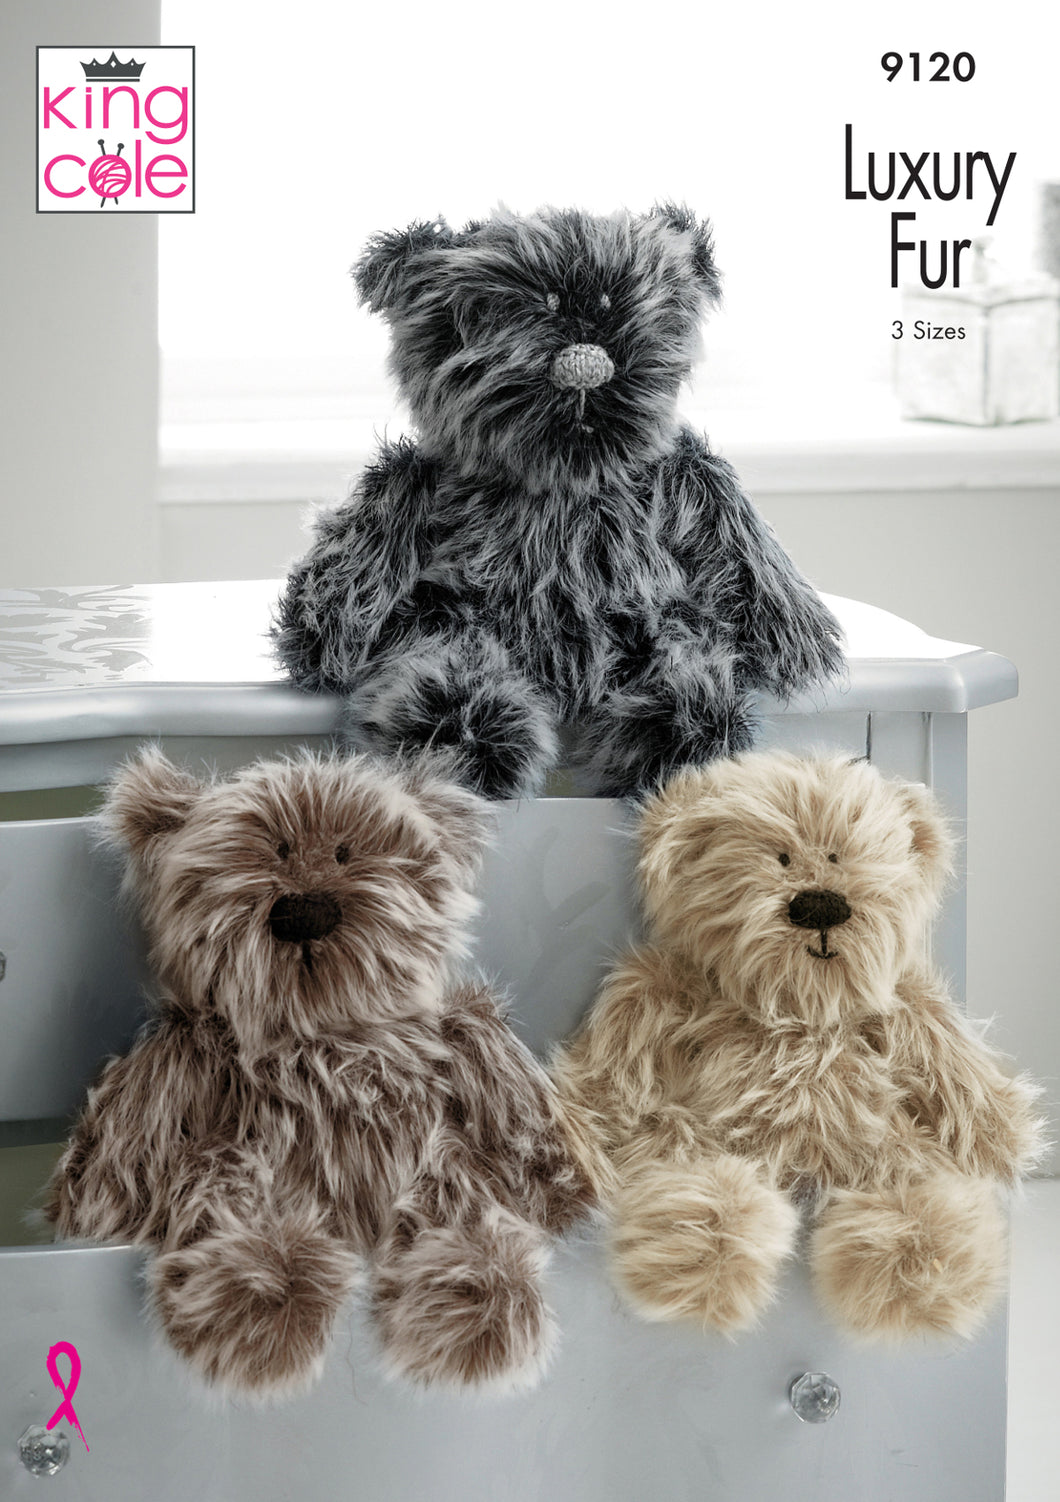 https://images.esellerpro.com/2278/I/170/761/king-cole-luxury-fur-knitting-pattern-bears-9120.jpg